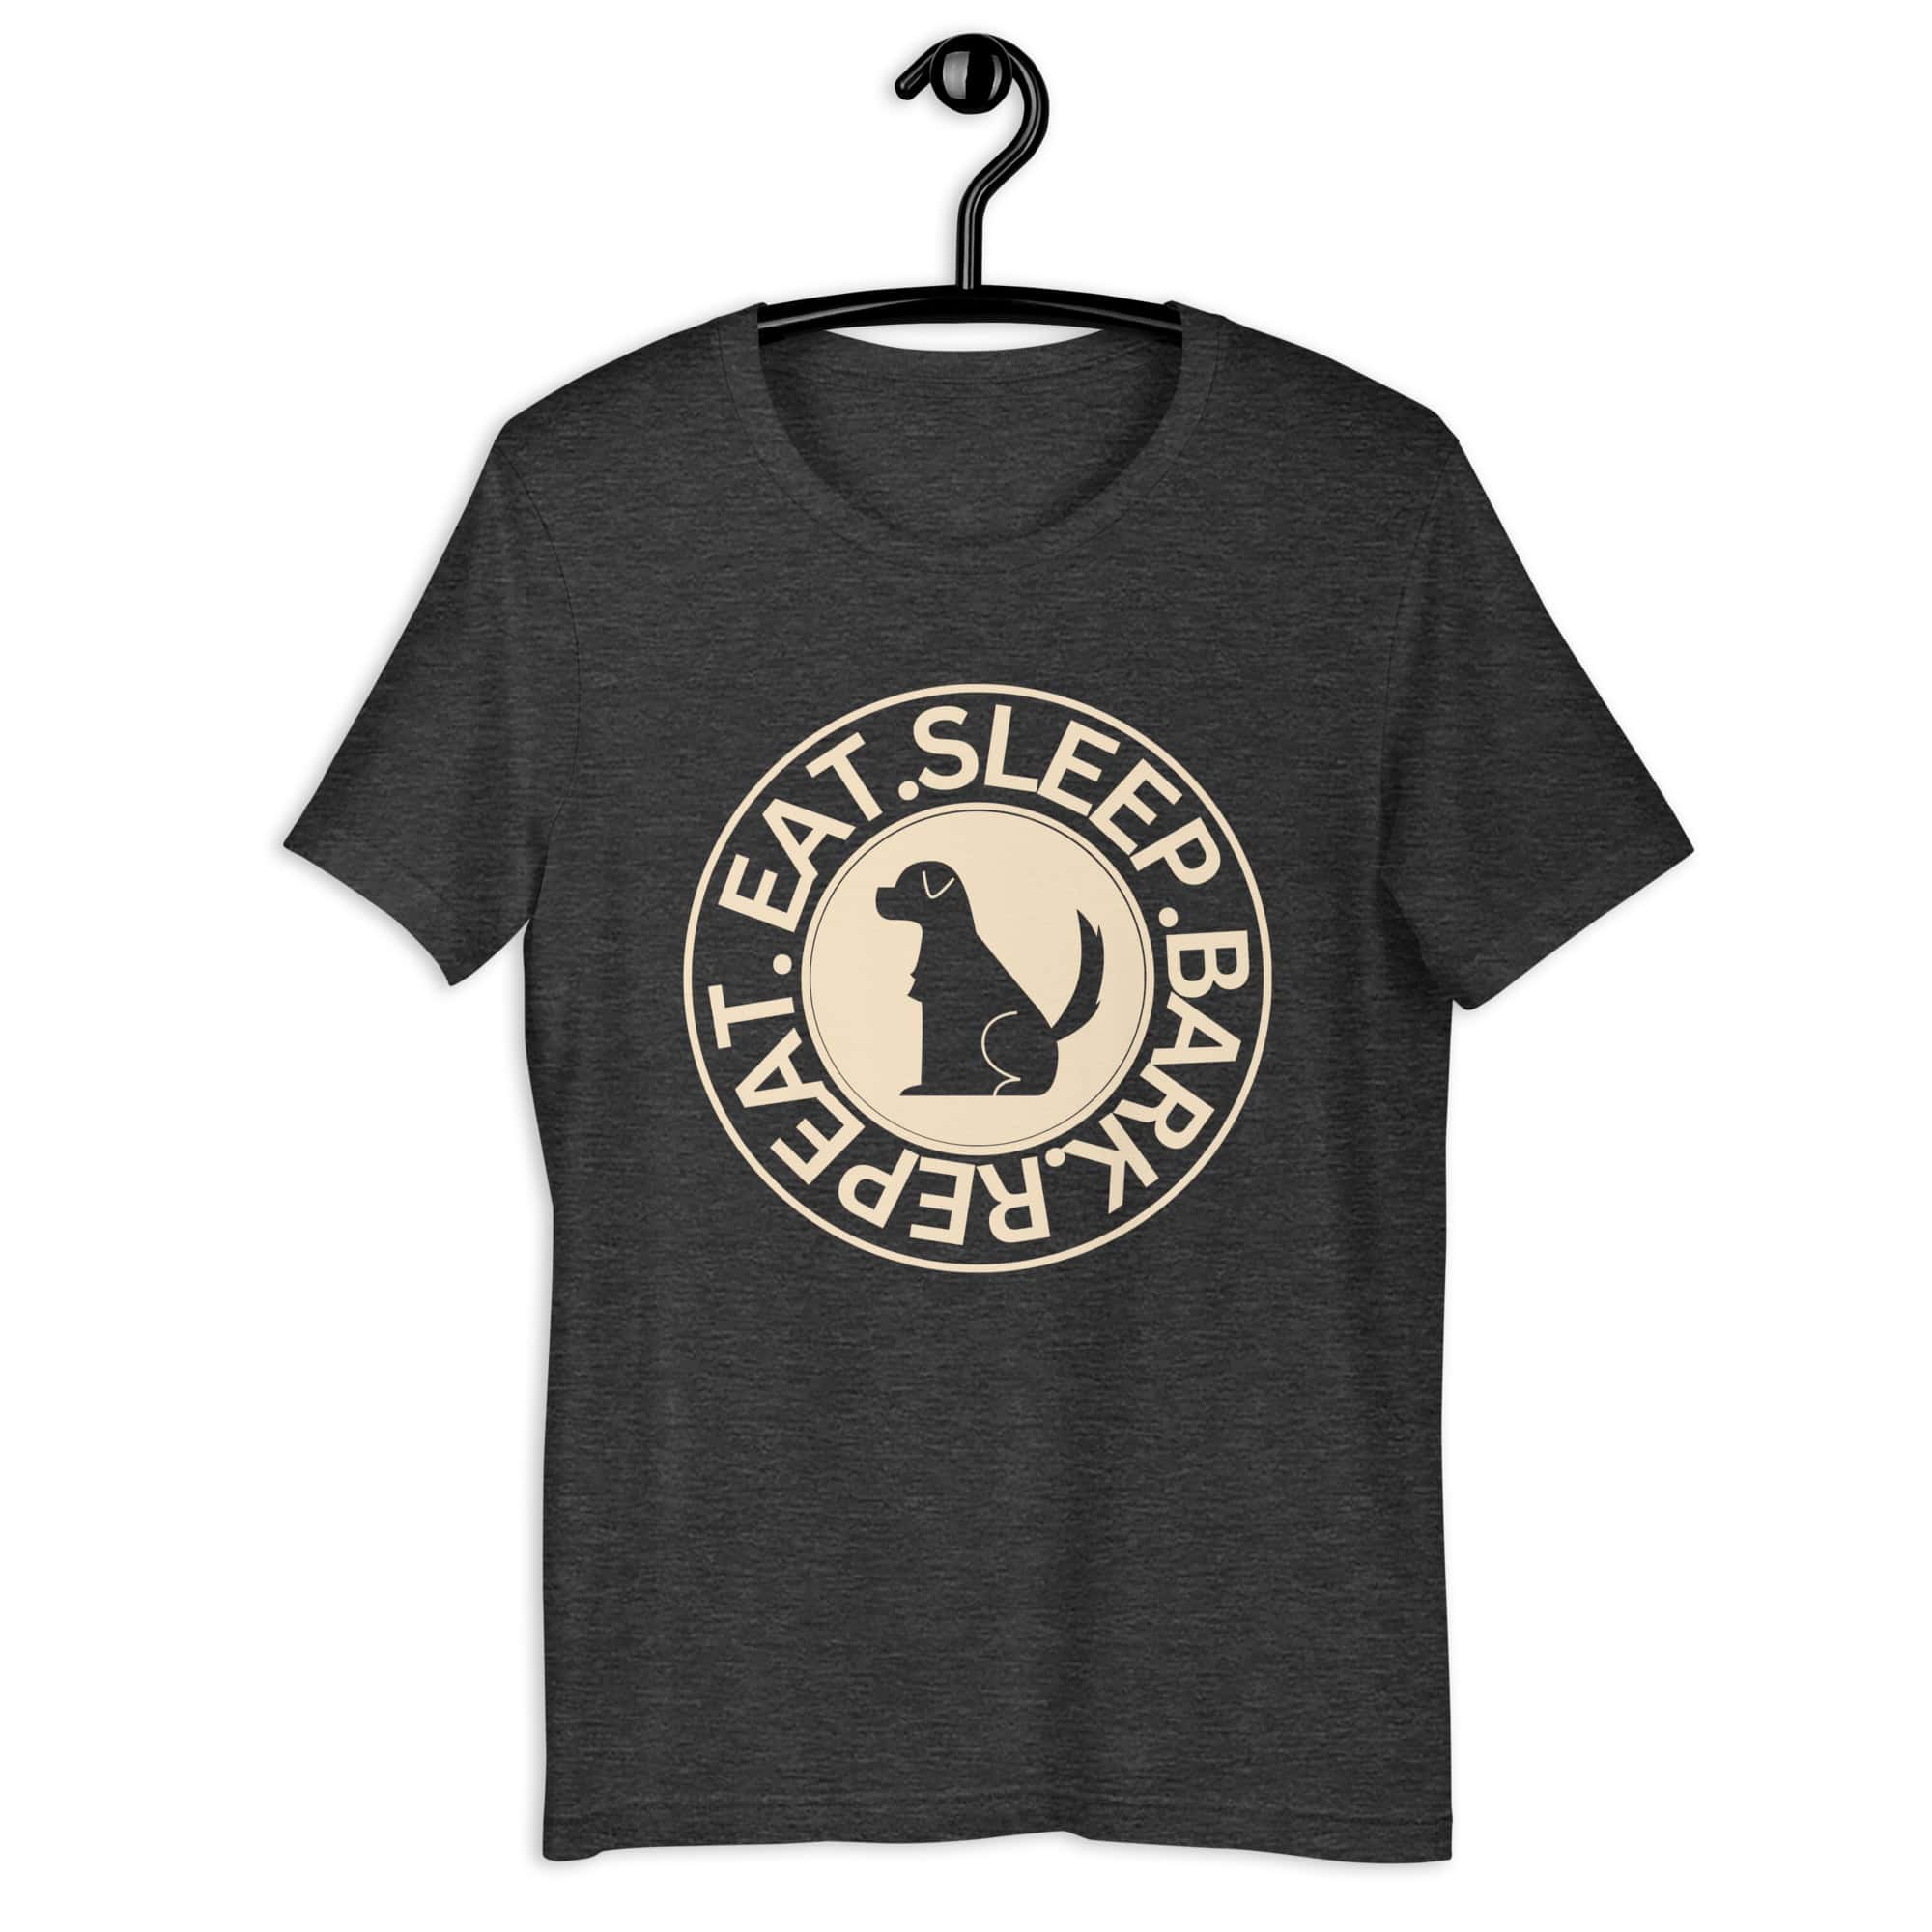 Eat Sleep Bark Repeat Ansylvanian Hound Unisex T-Shirt. Dark Grey